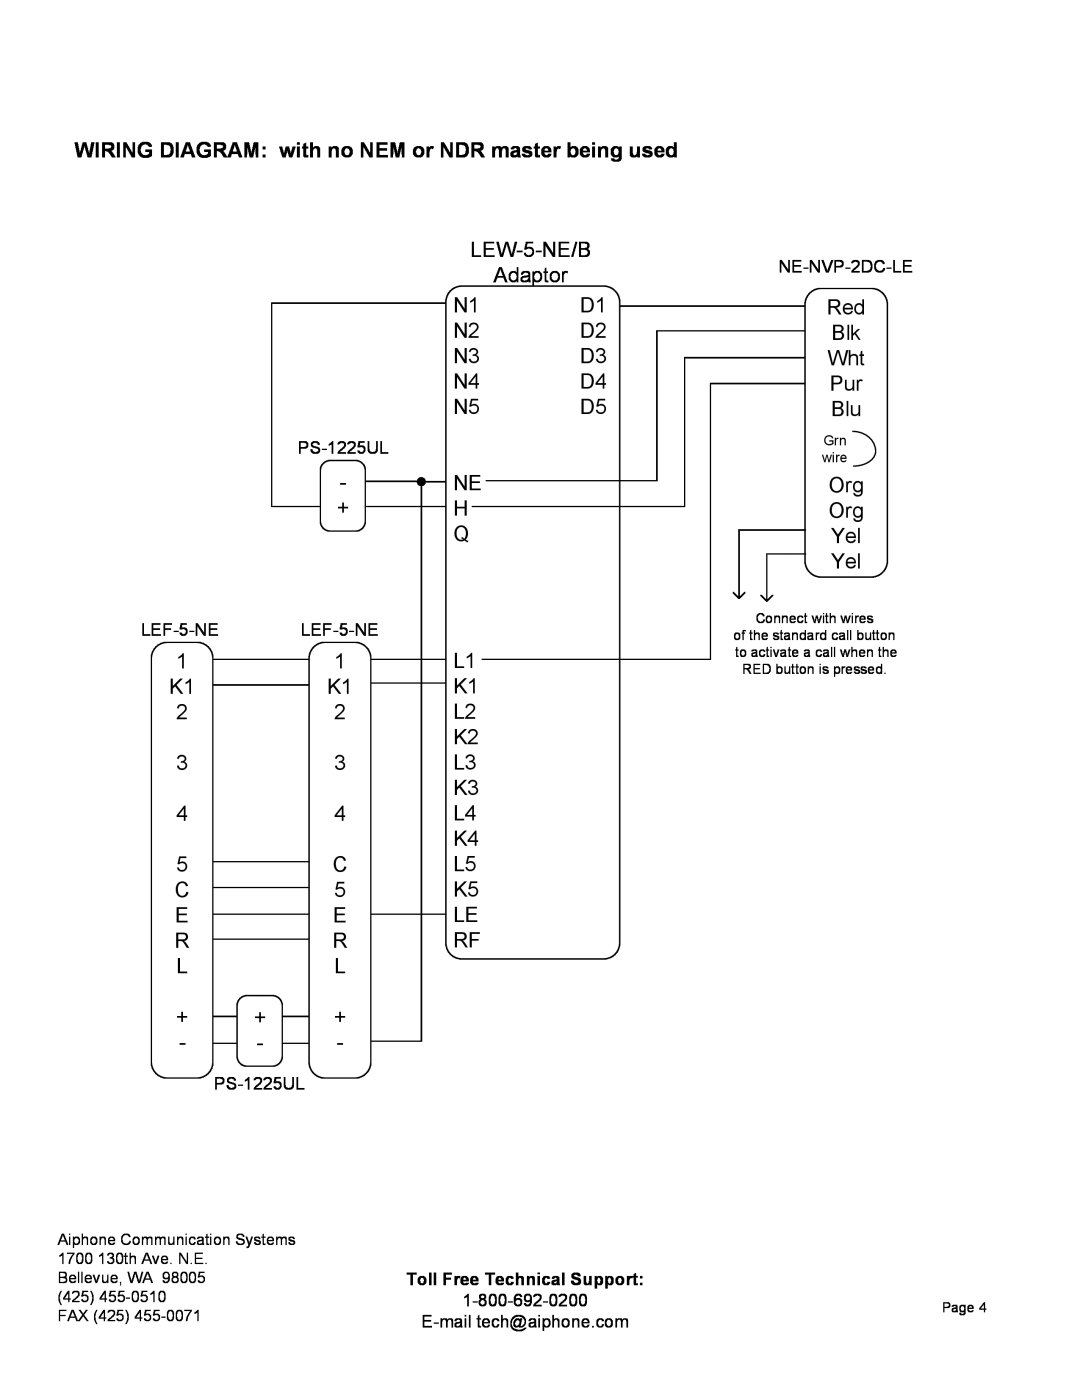 Aiphone LEF-5-NE manual LEW-5-NE/B Adaptor 